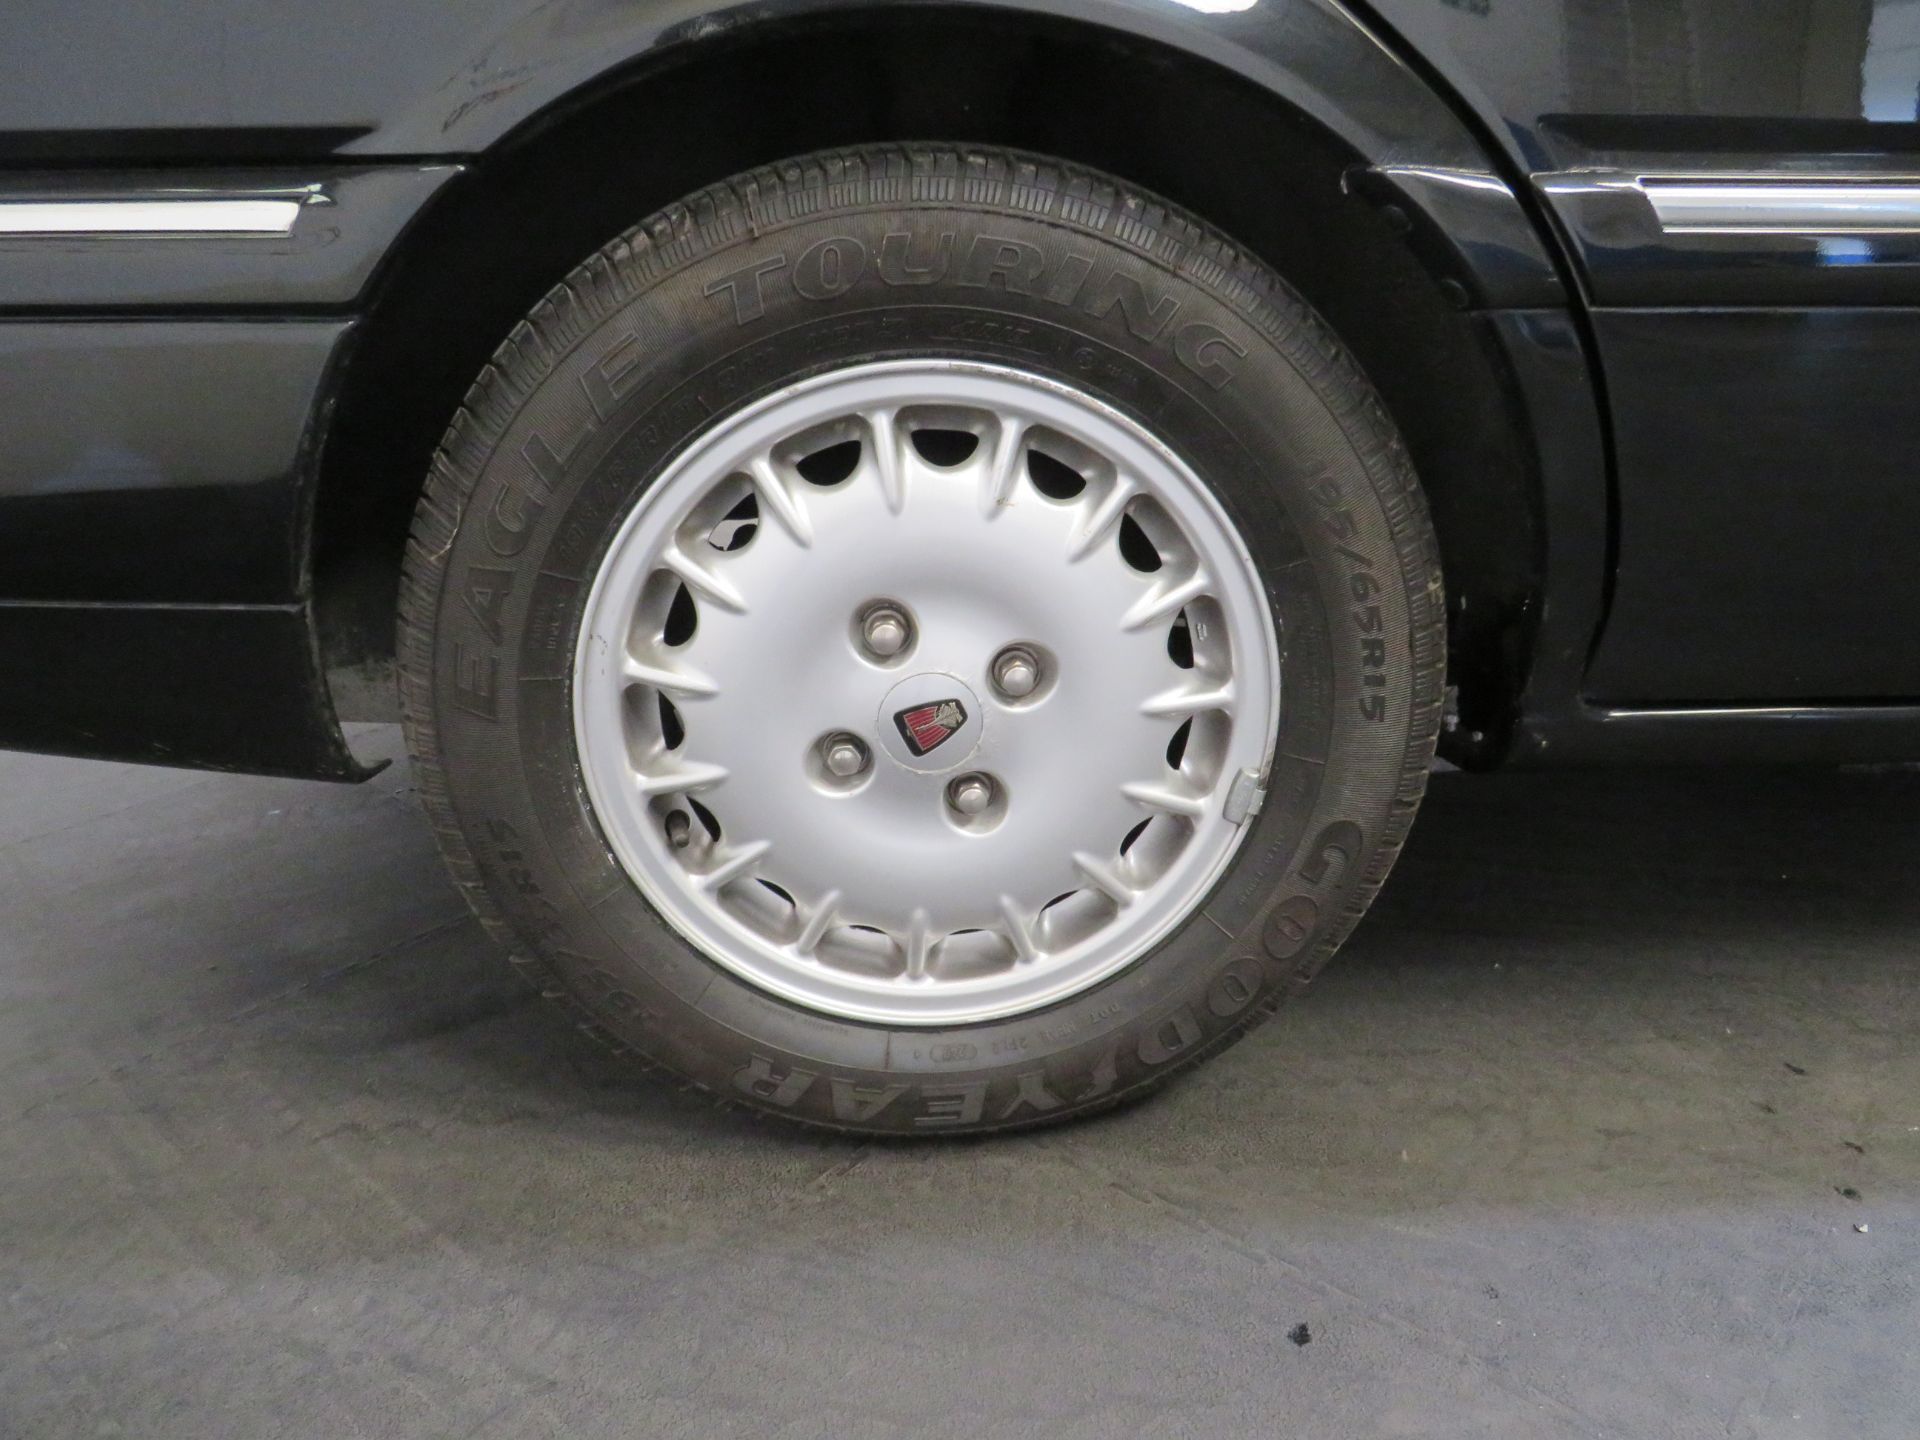 1997 Rover 825 SI Limousine Auto - 2496cc - Image 15 of 15